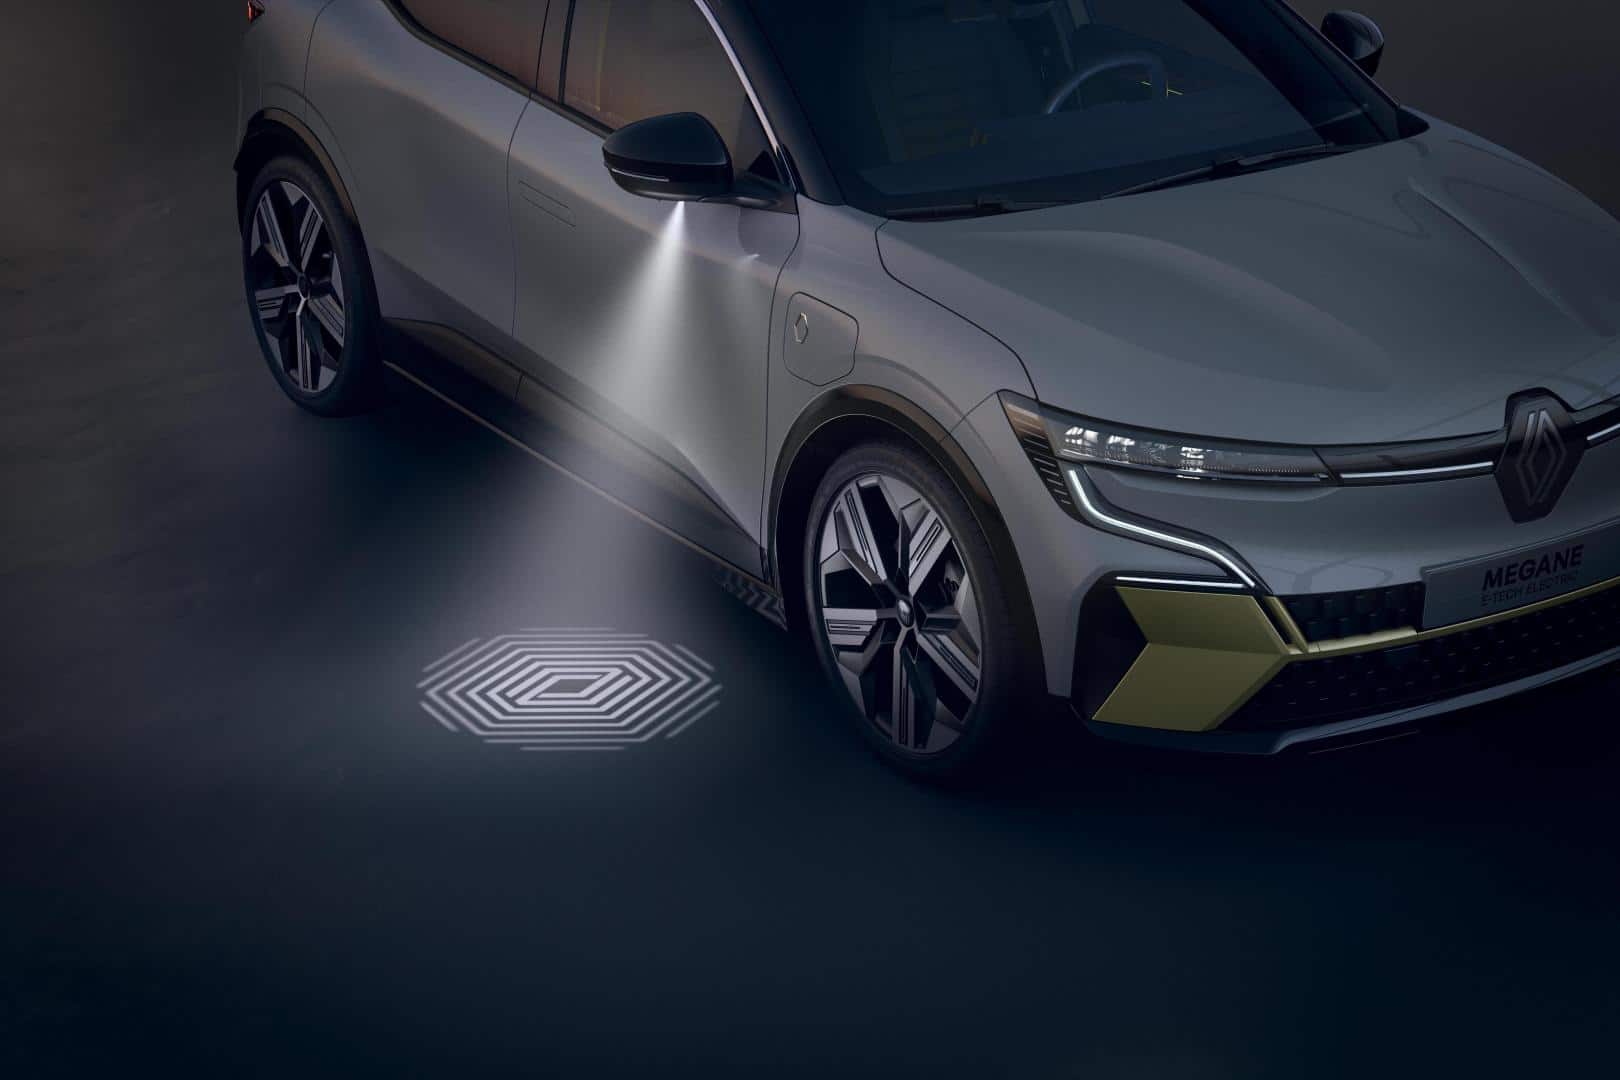 Einstiegsbeleuchtung beim Renault Mégane E-TECH Electric Autohaus Schouren